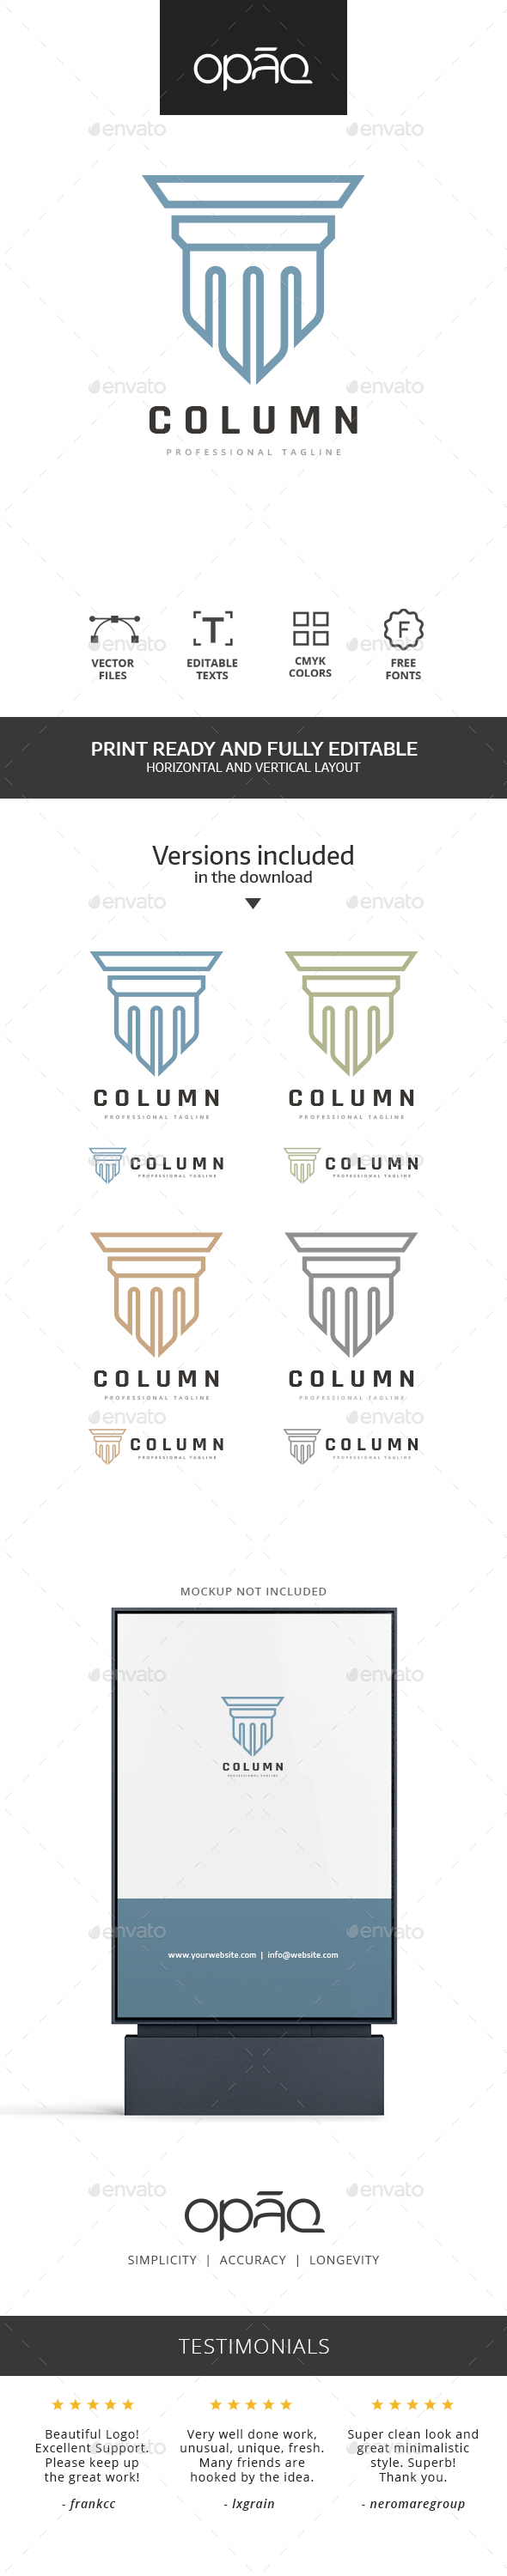 Artistic Column Monument Logo